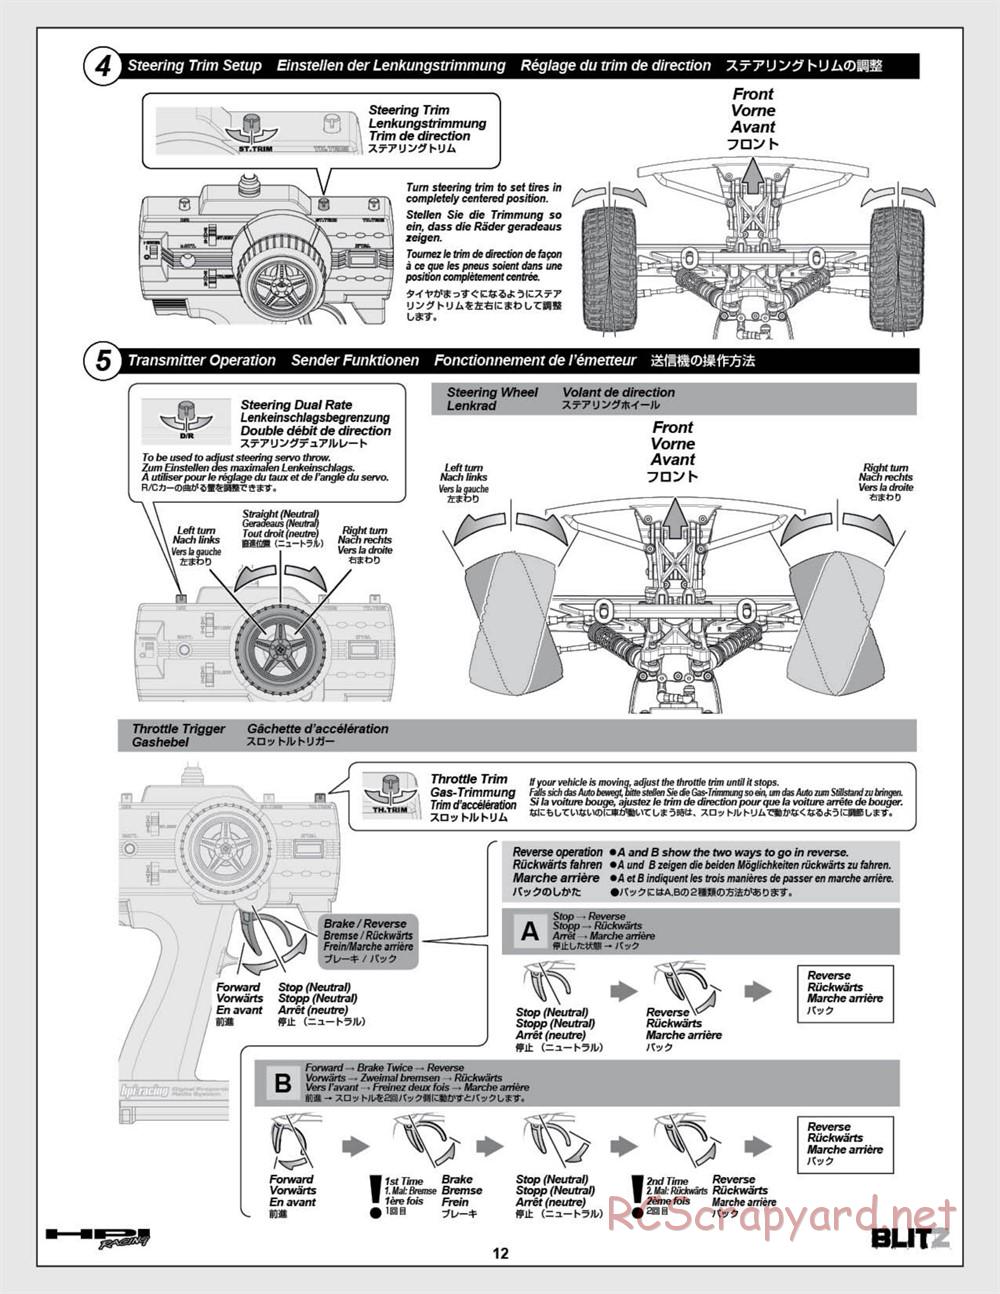 HPI - Blitz Art Series - Manual - Page 12